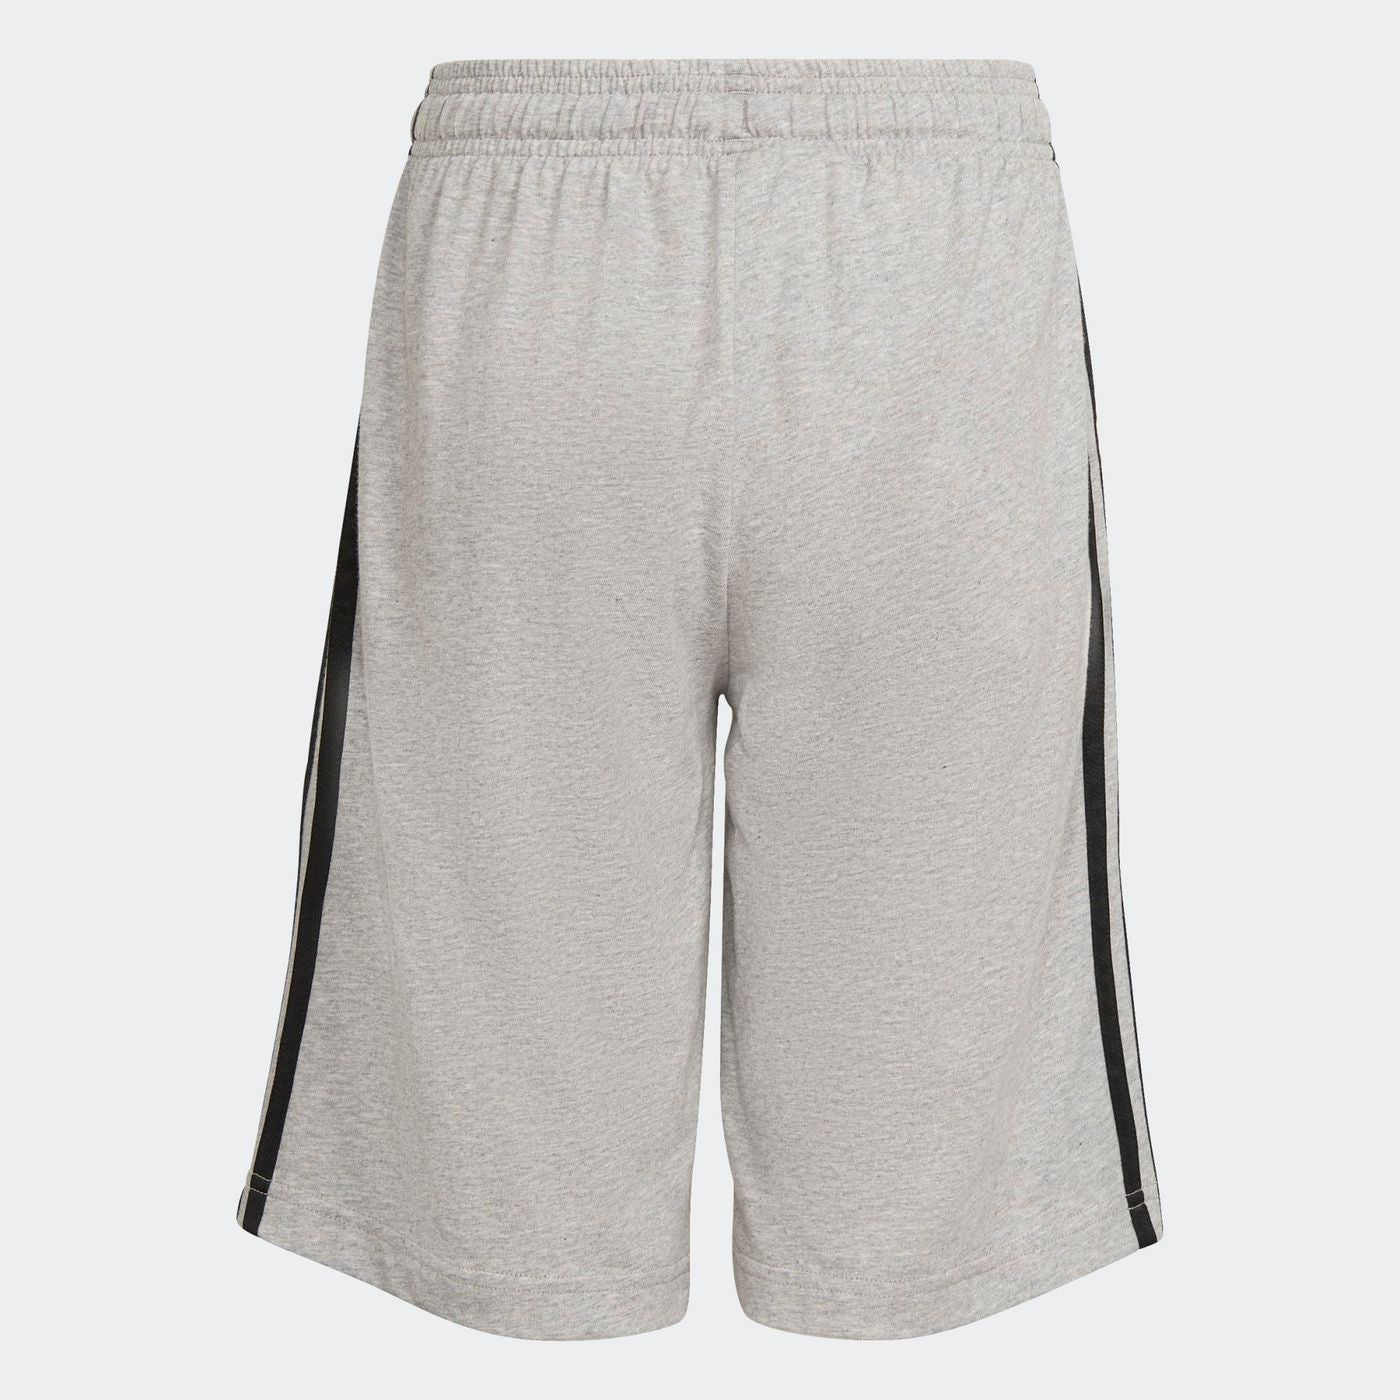 HE9310 - Shorts - Adidas